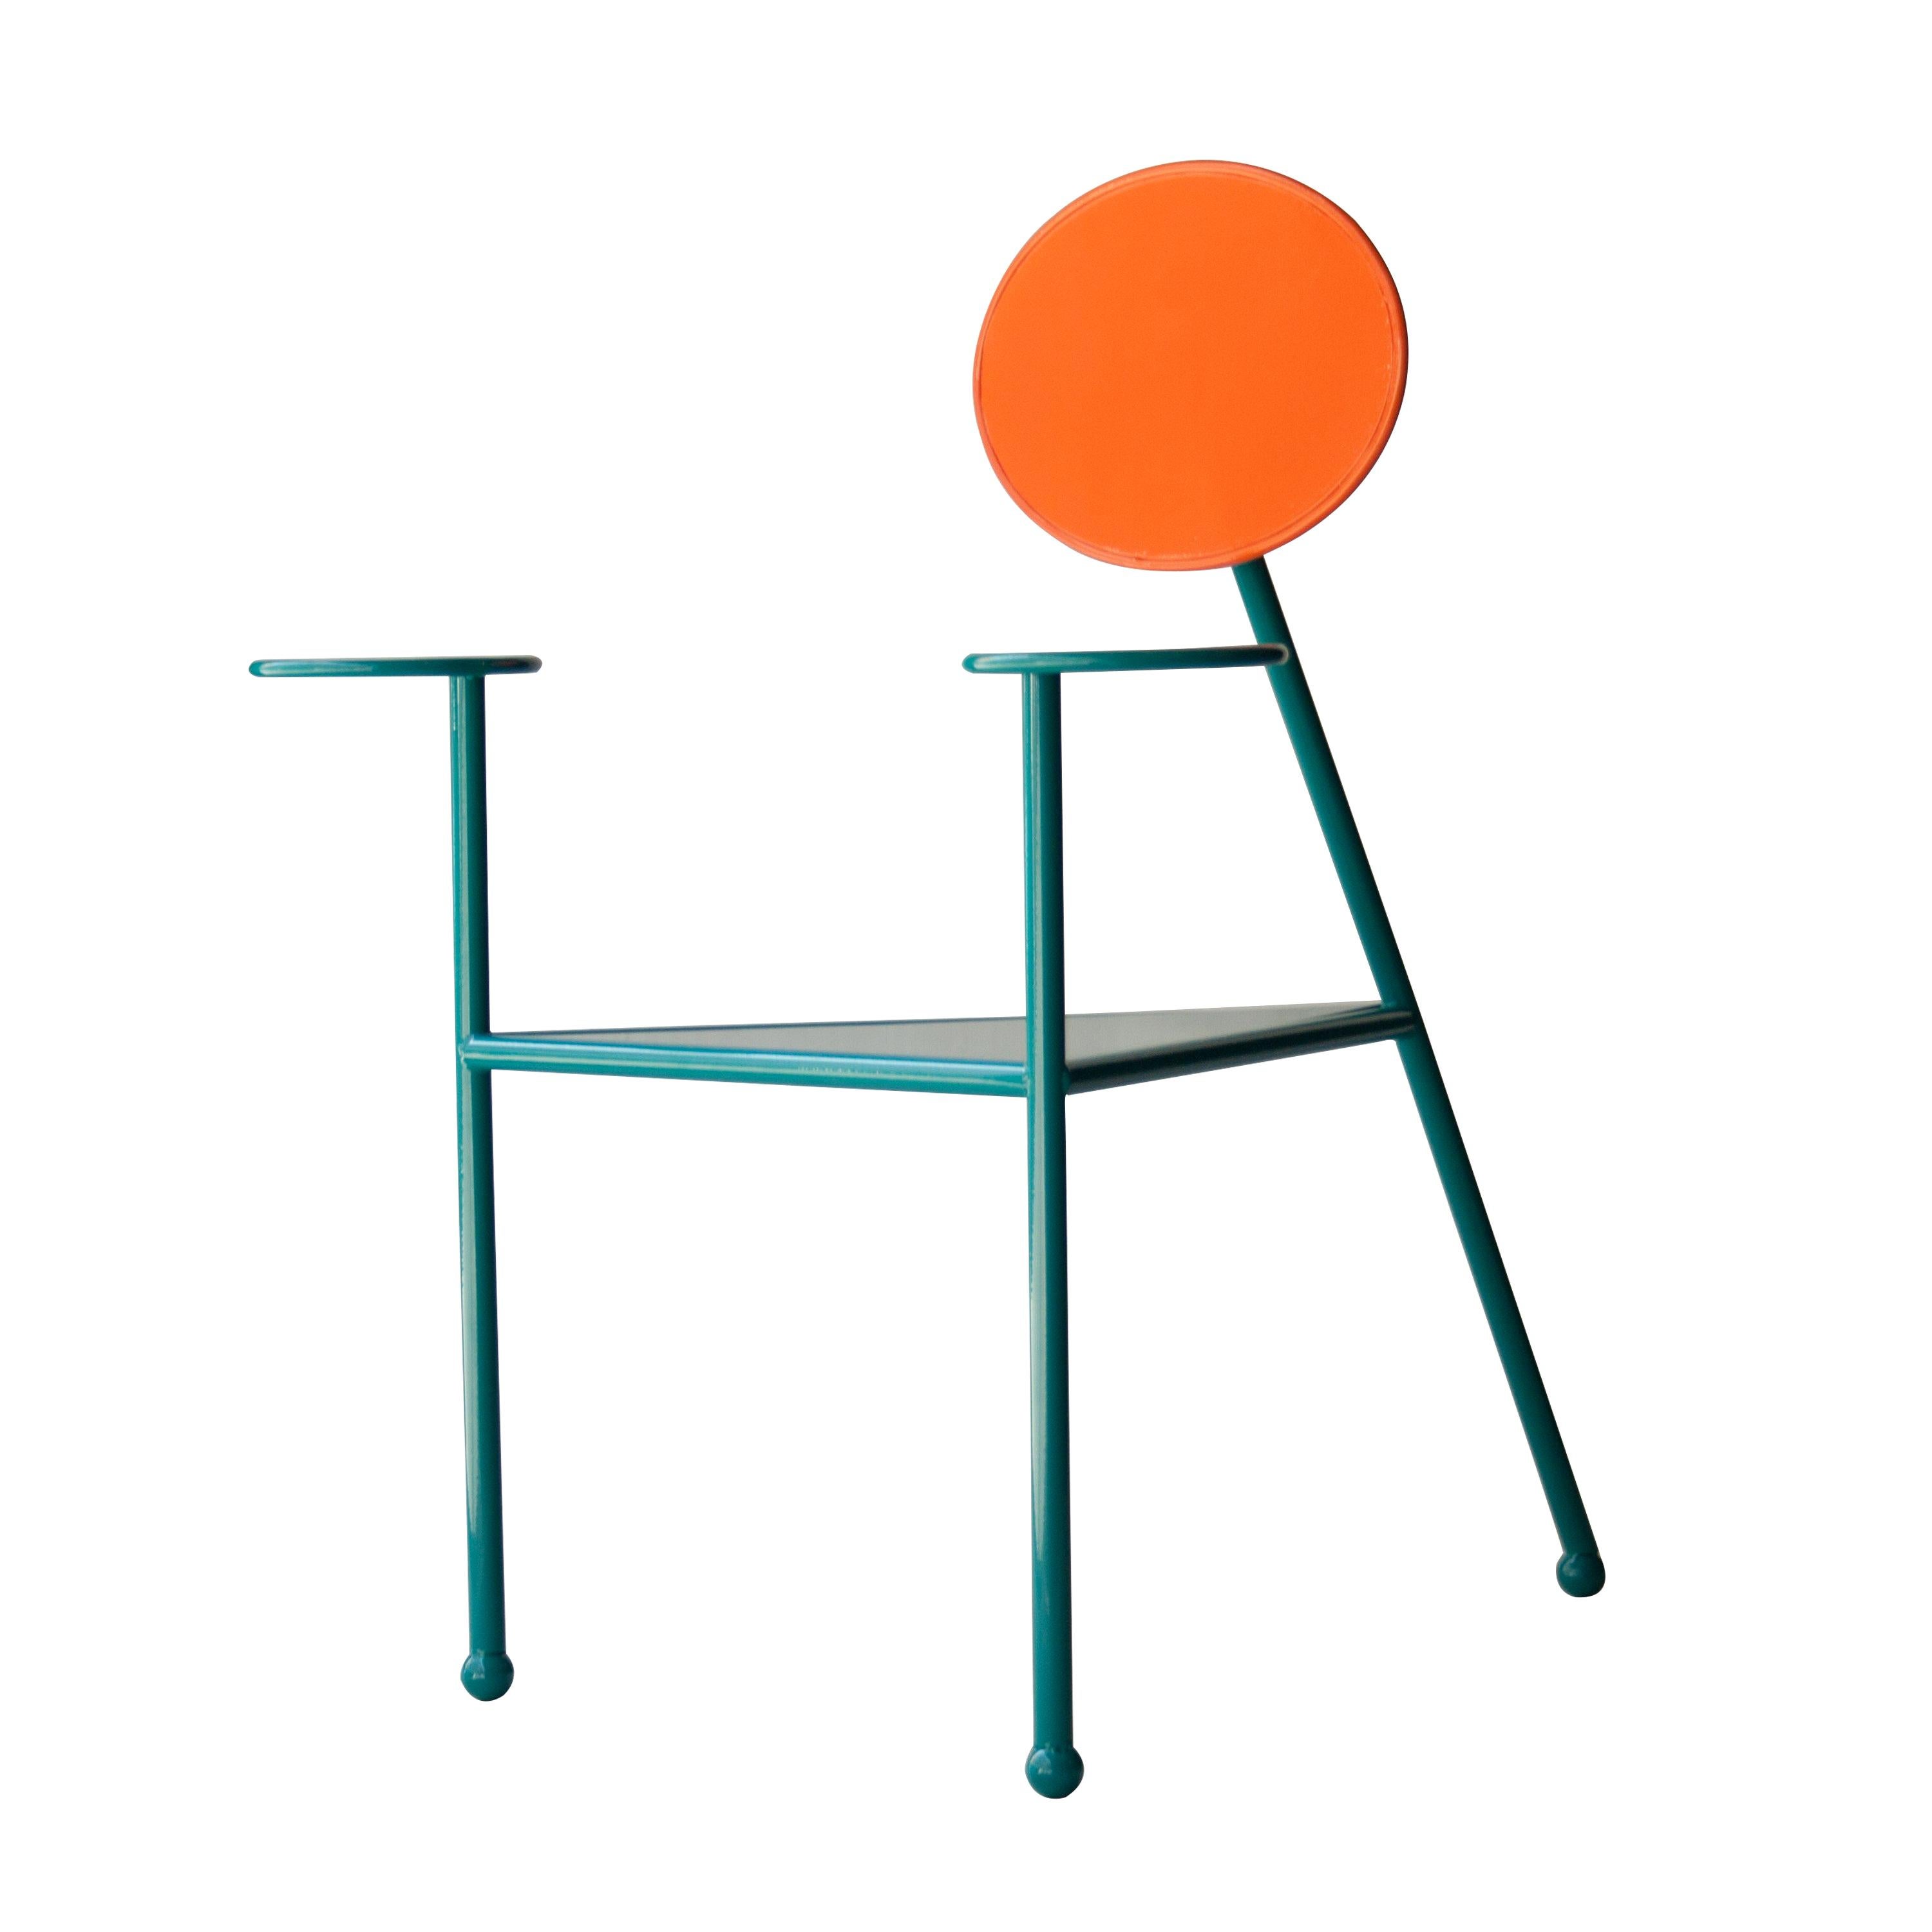 Kresta Studio Contemporary Steel Laquered Orange Green Chair, Spain, 2019